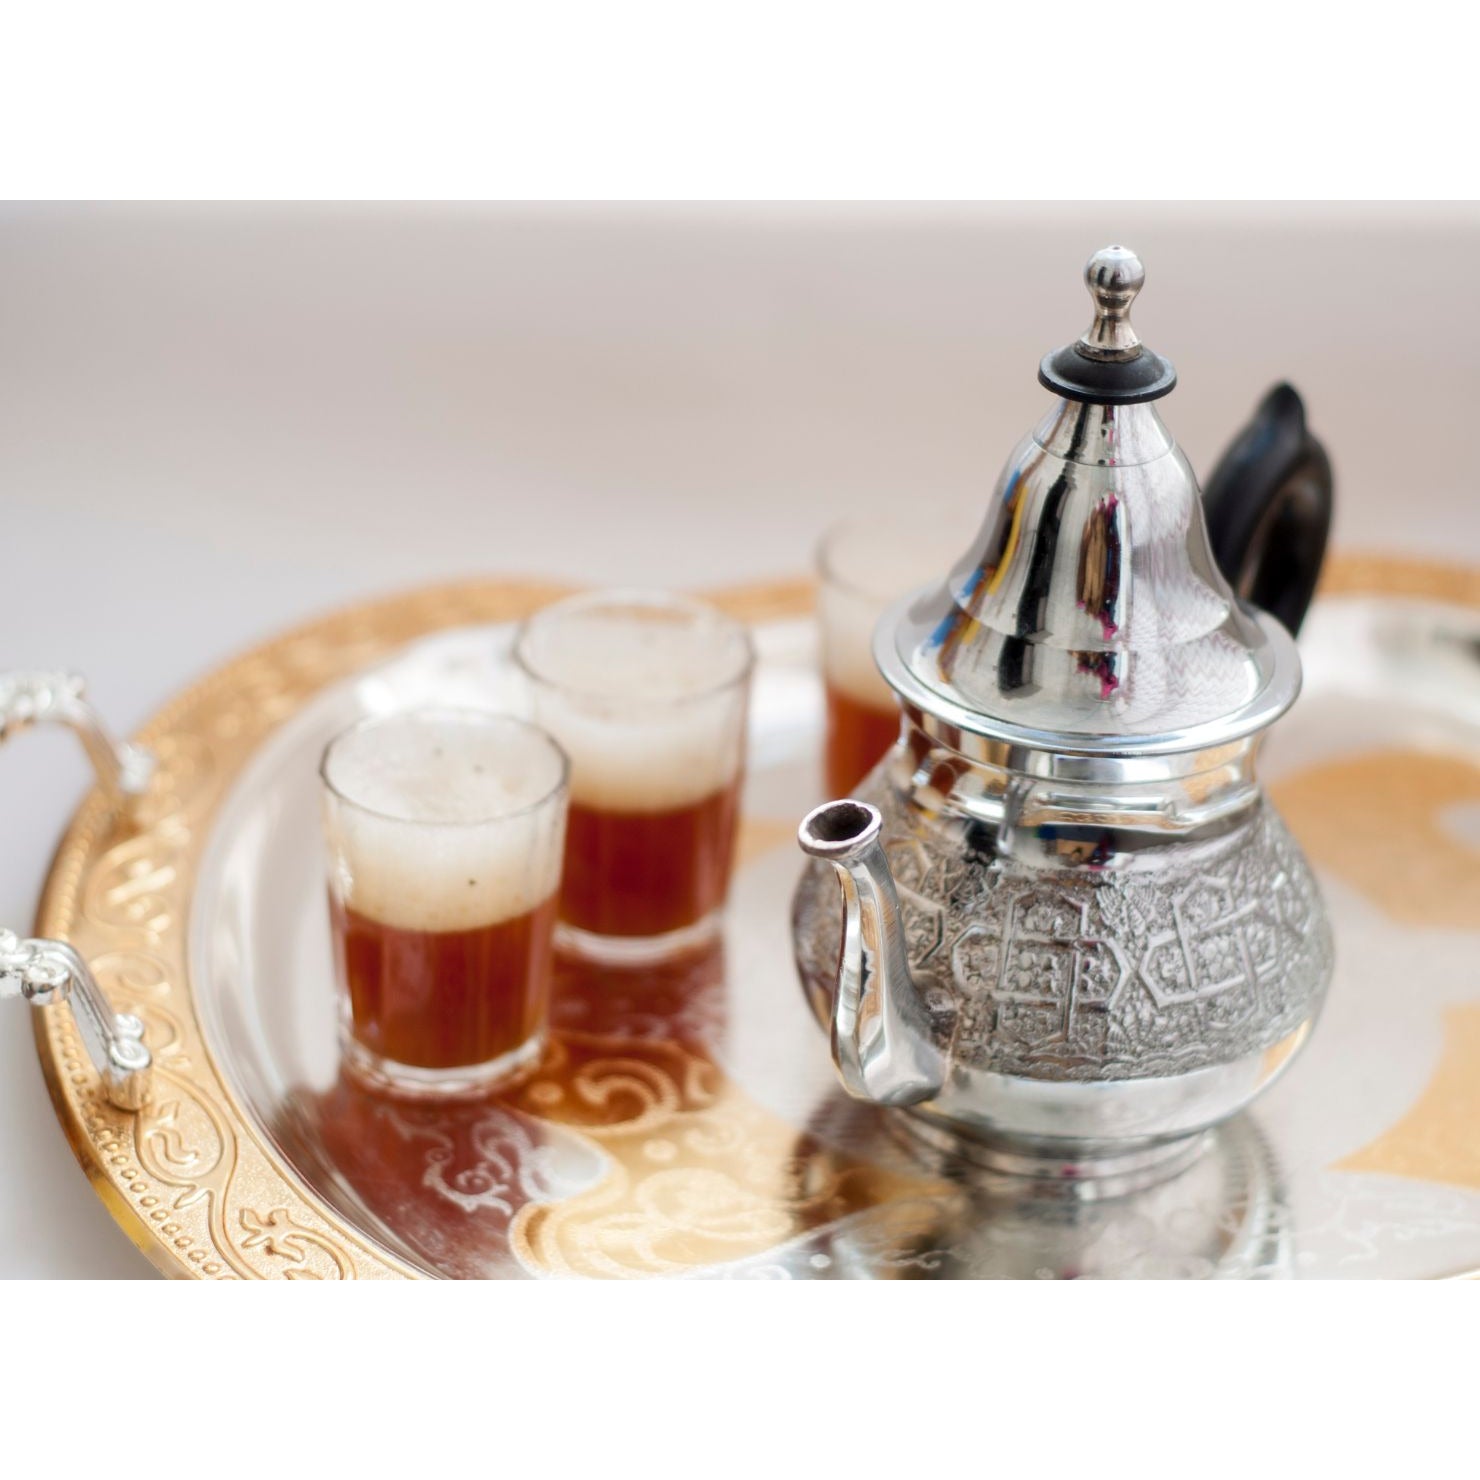 Habibi (loved one) Tea Tin